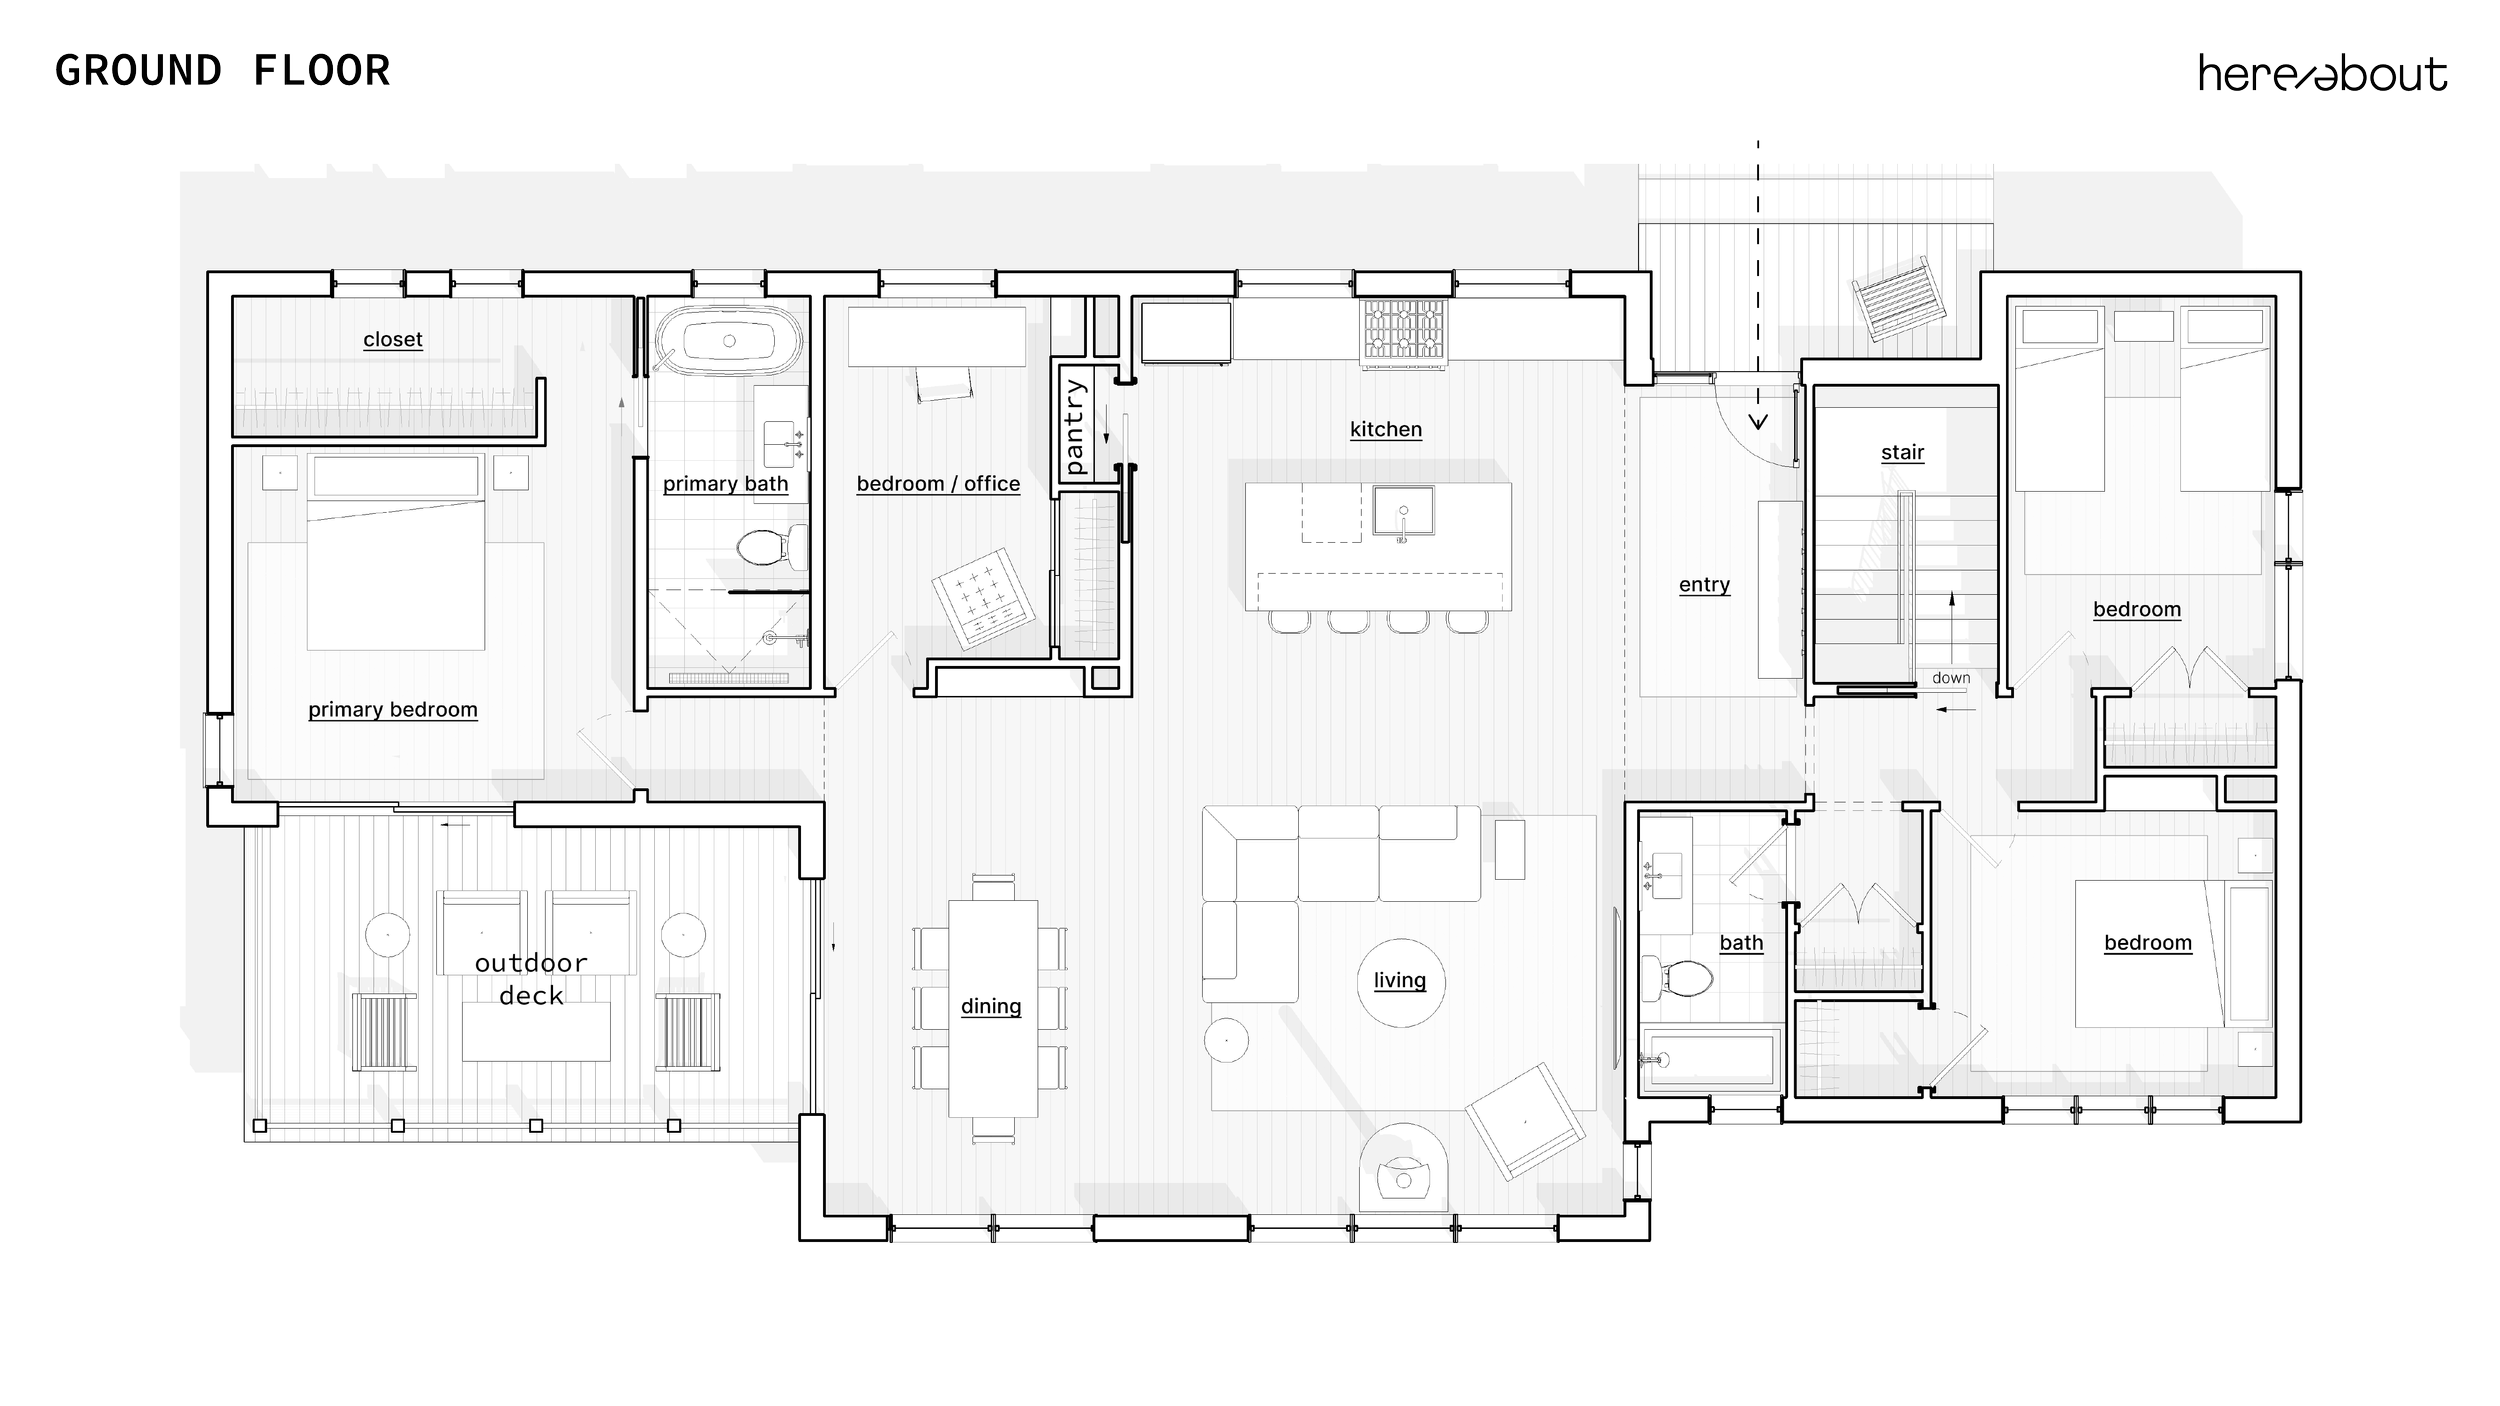 Hereabout - Floor Plan - The Kinfolk Basement-11.png